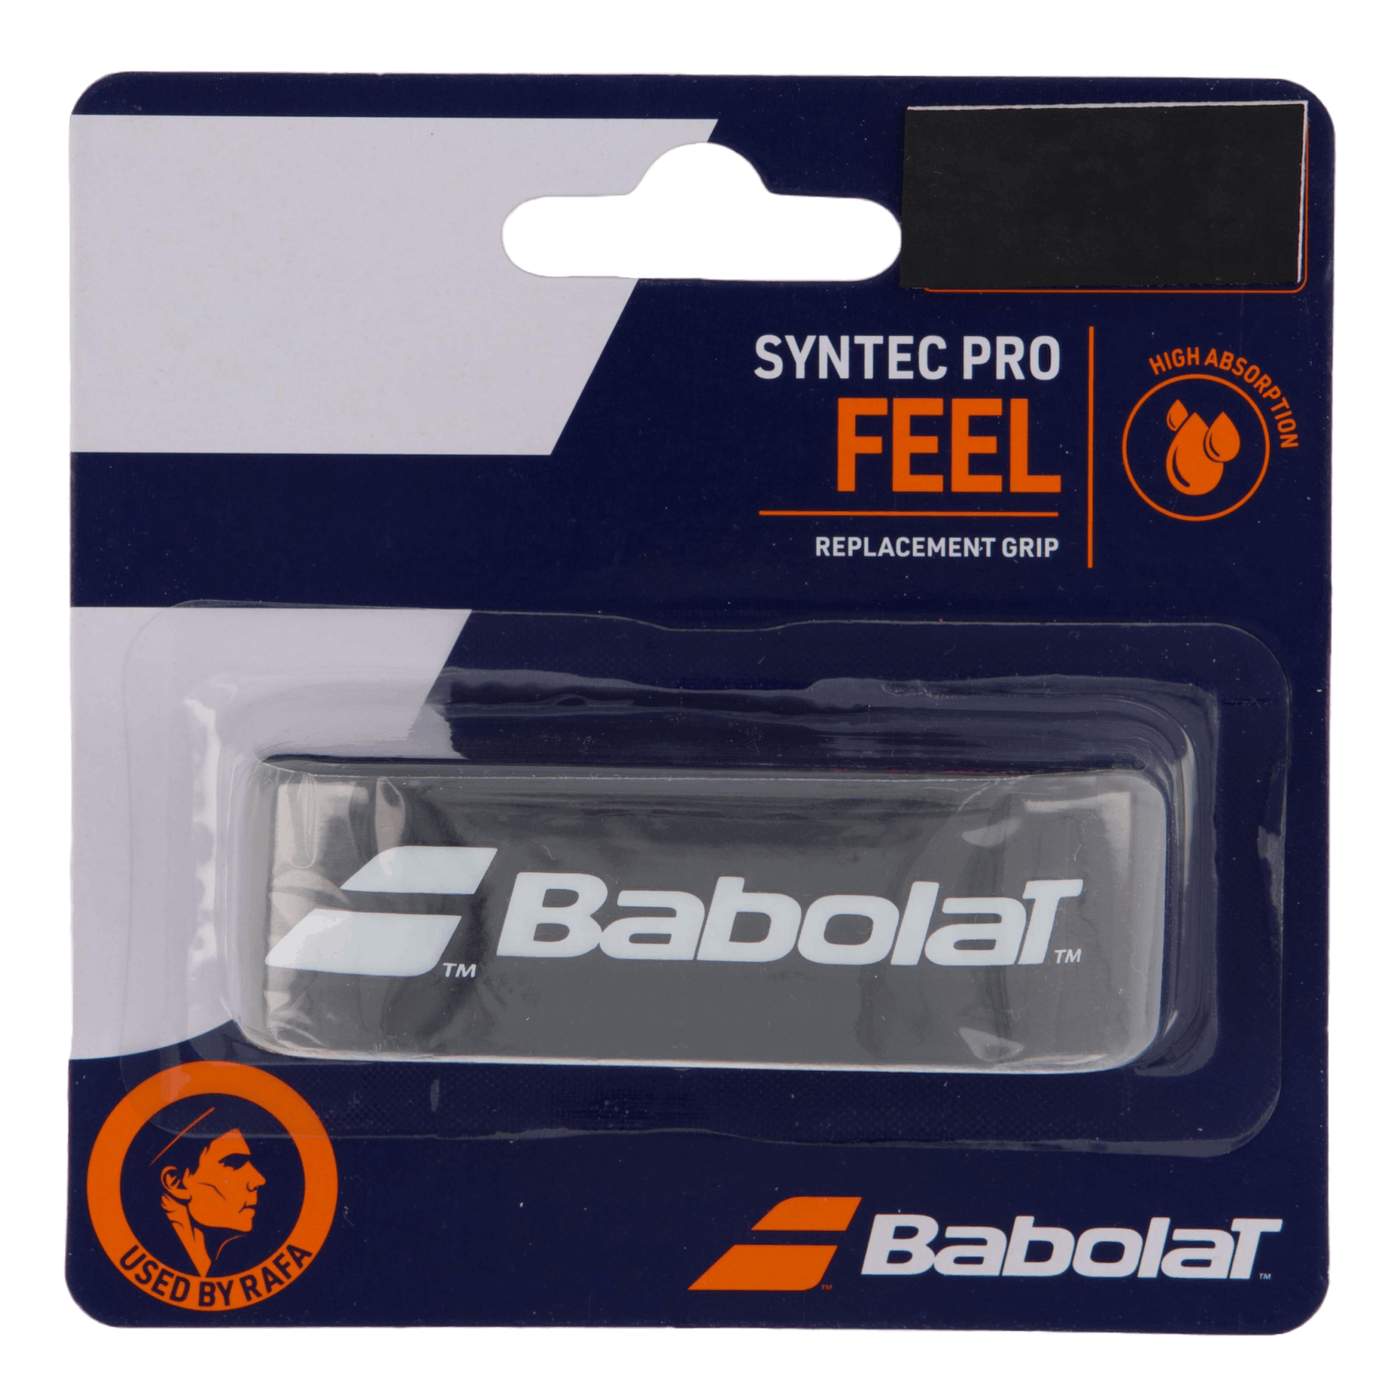 Syntec Pro 1-pack Black